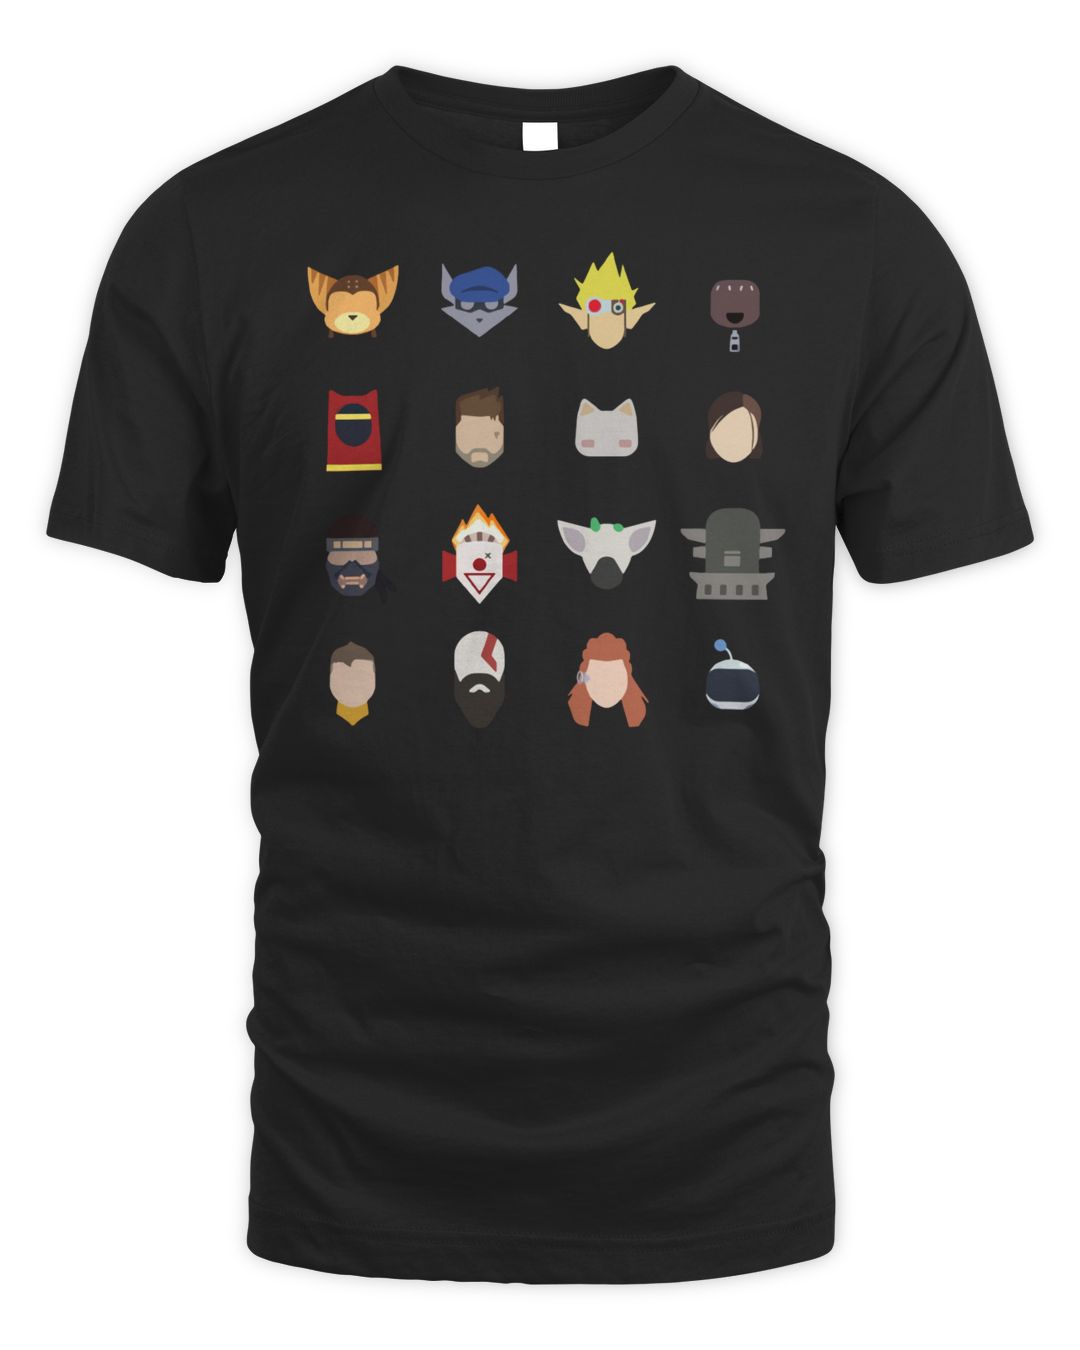 Playstation Merch Studios Character Icons T-Shirt